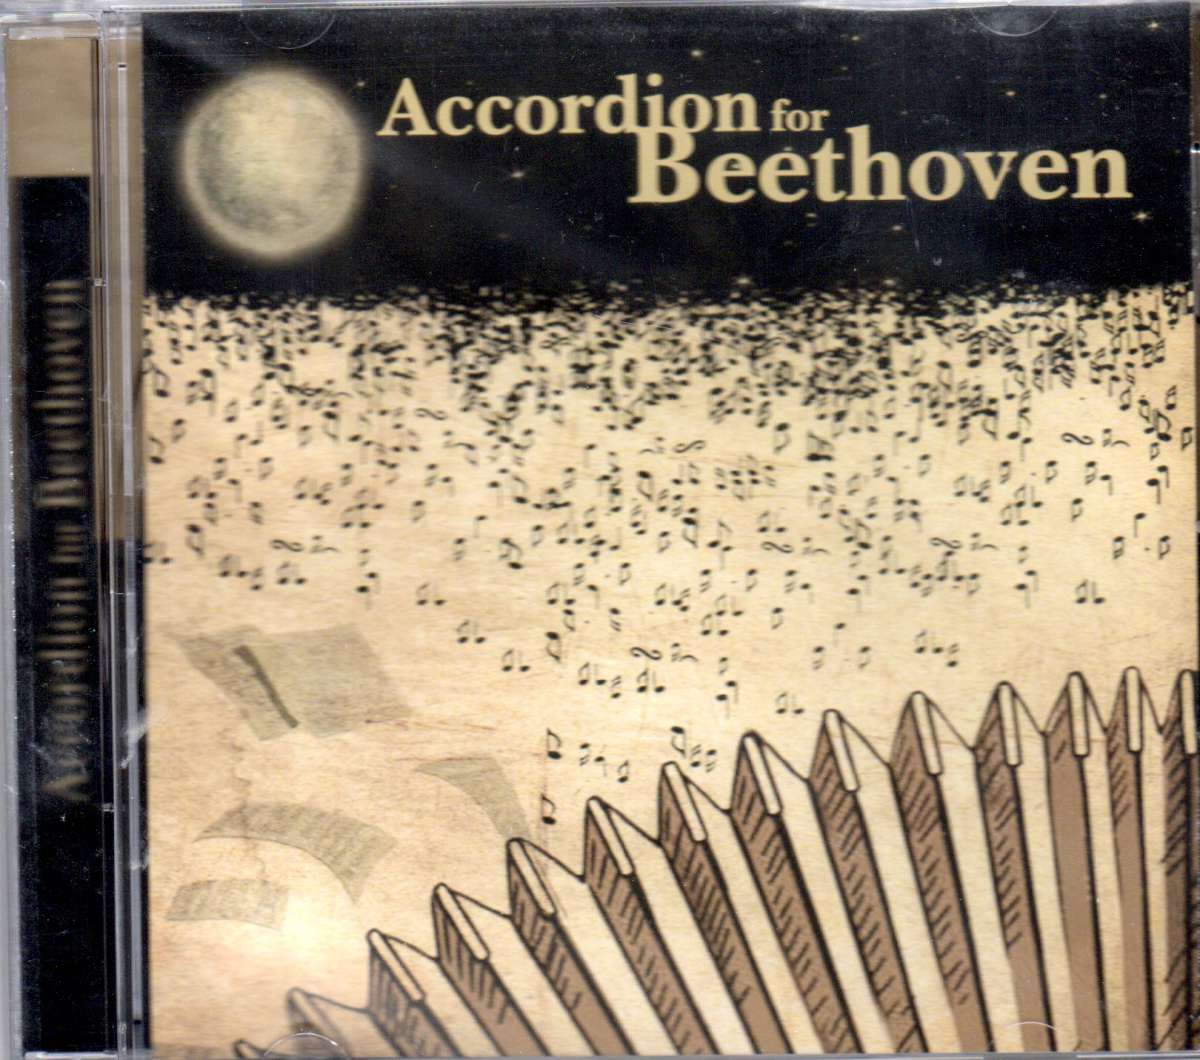 Accordion for Beethoven CD sleeve